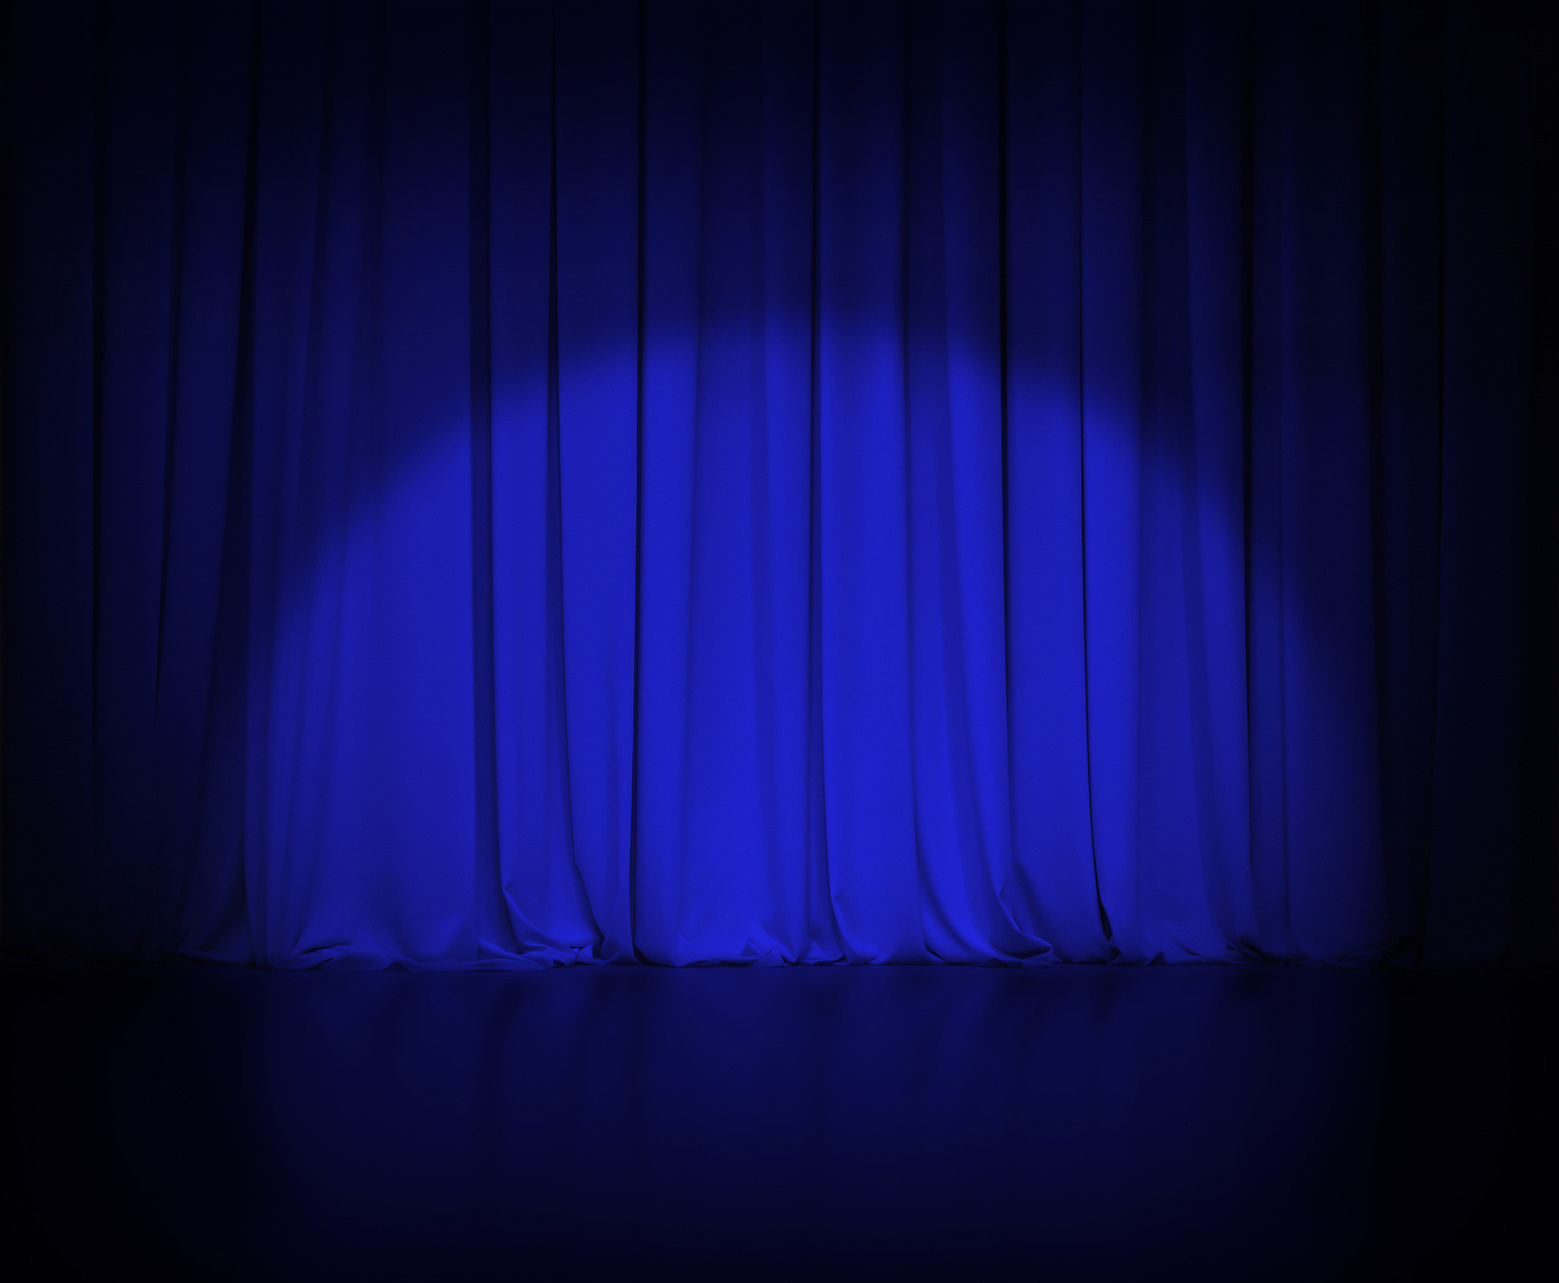 Theatre Dark Blue Curtain Or Ds Background With Light Spot Tim Vine